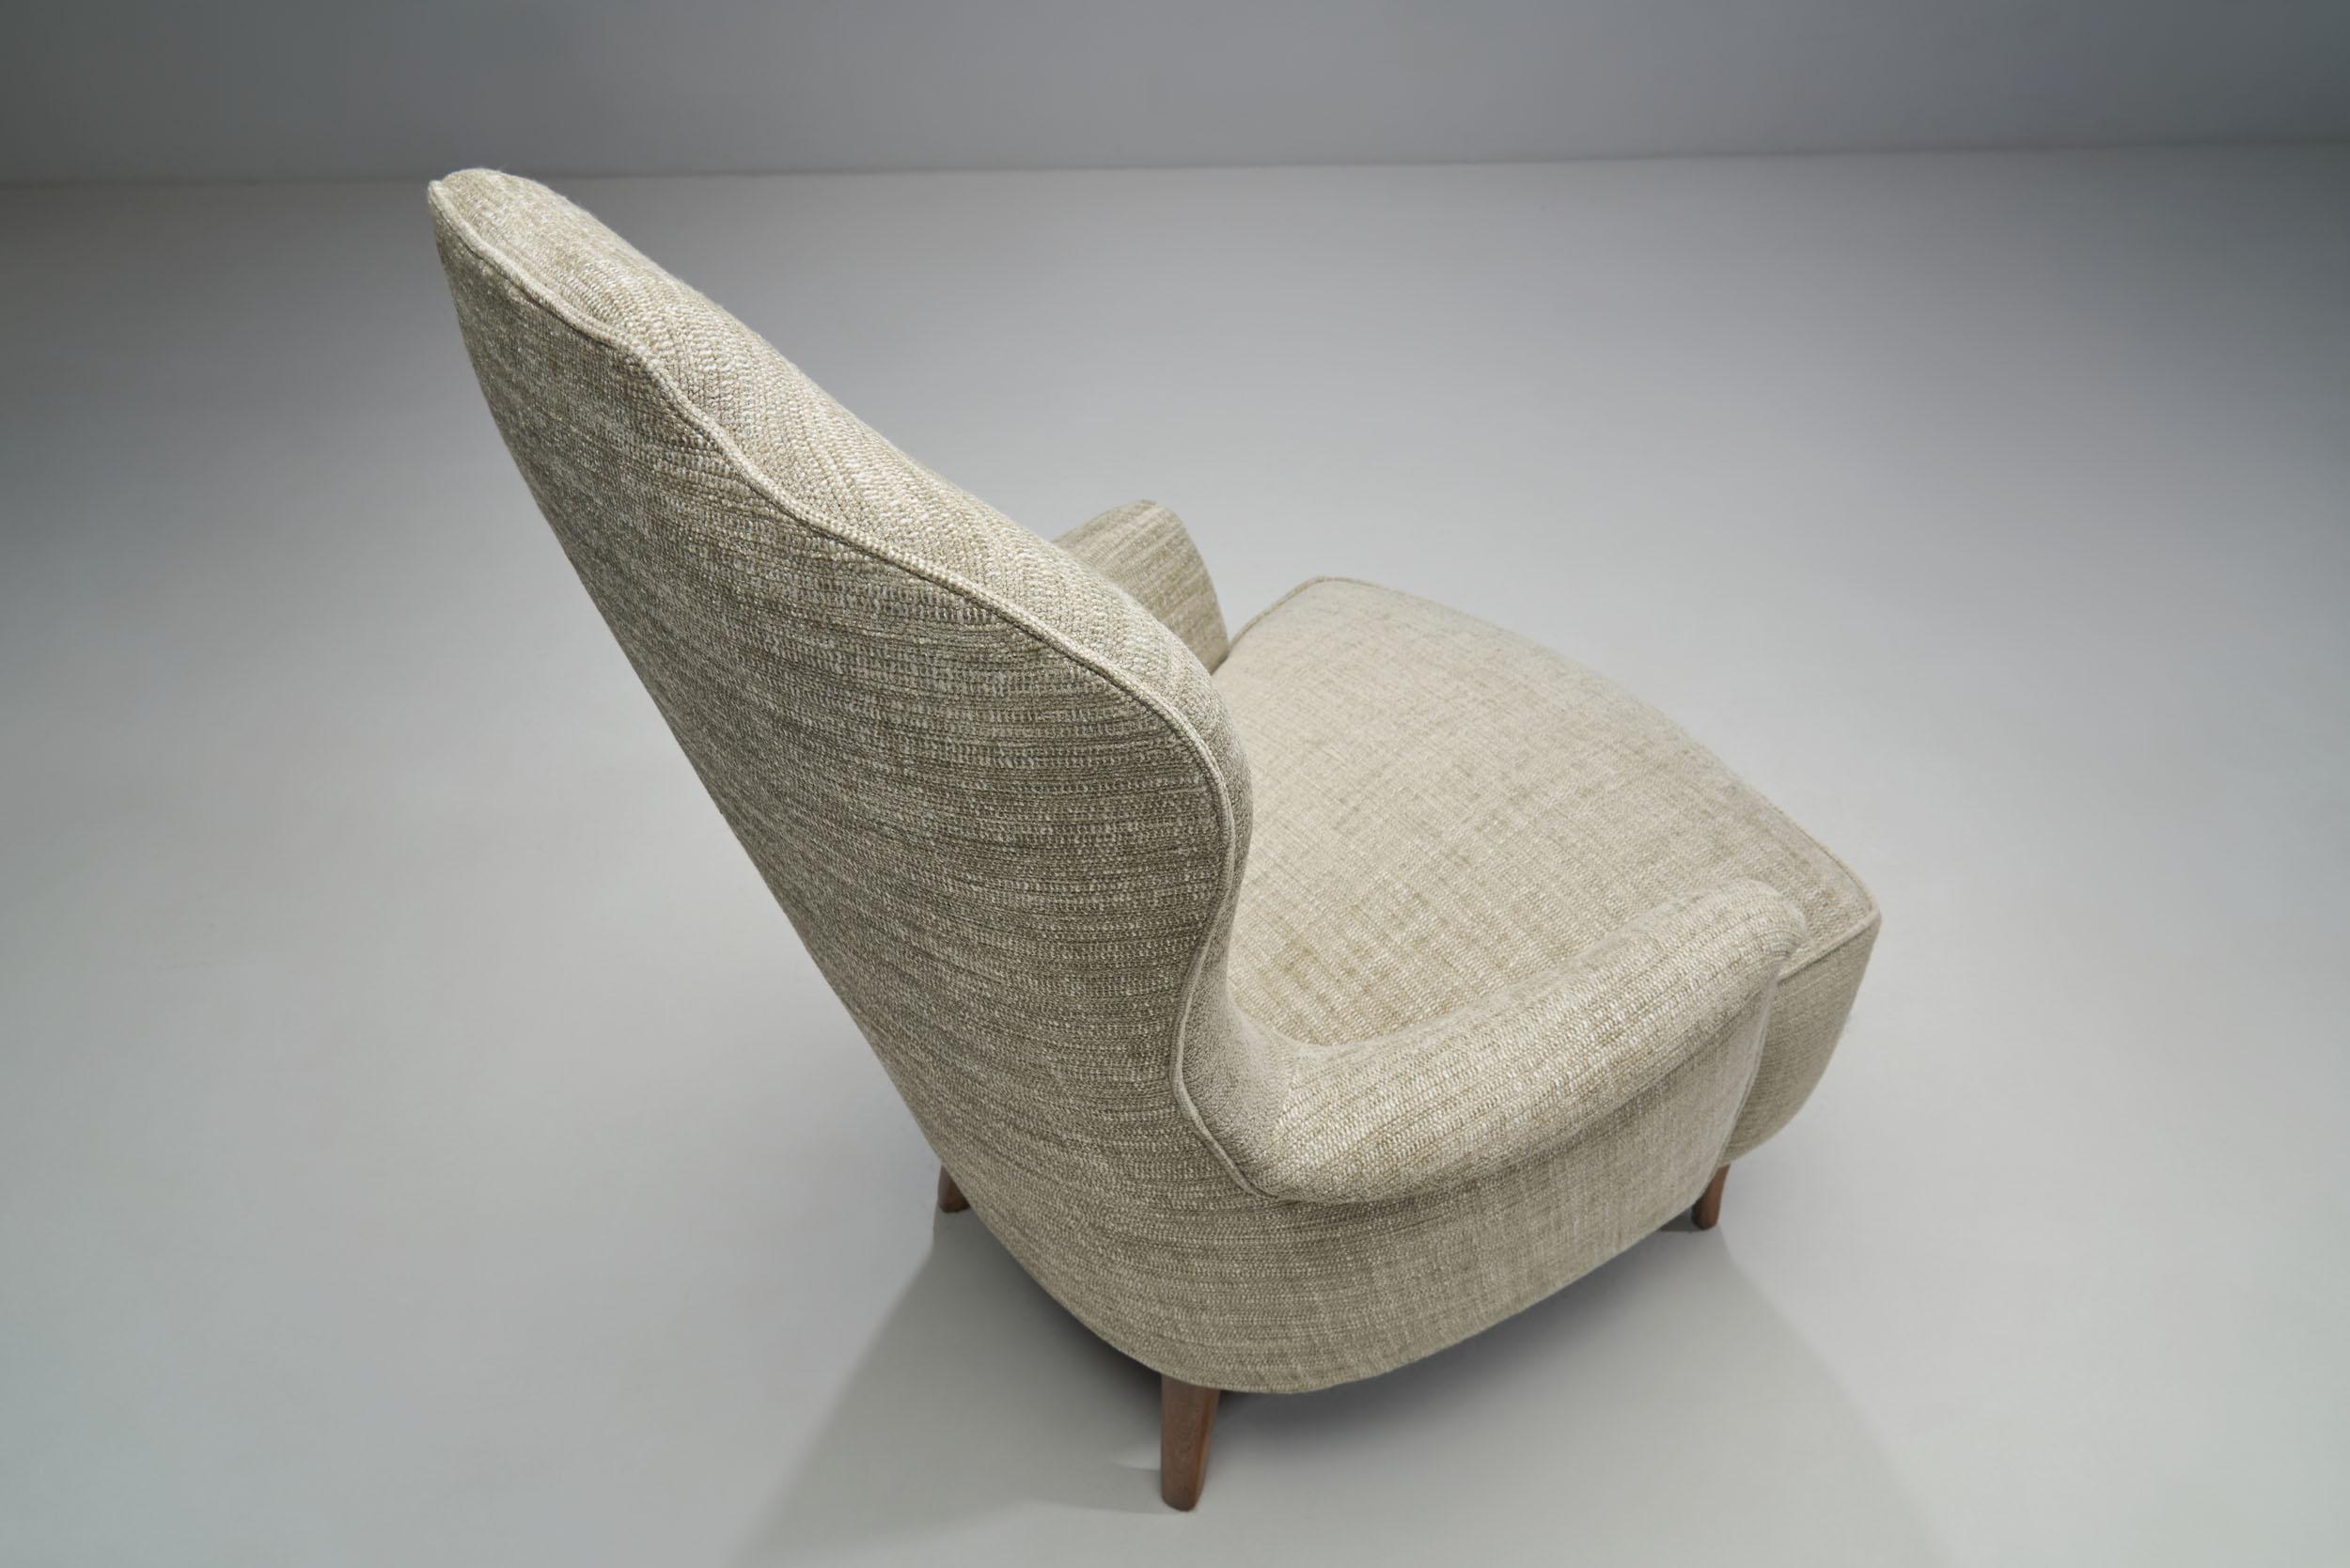 Fabric “Farmor” Armchair by Carl Malmsten for O.H. Sjögren, Sweden, 1956